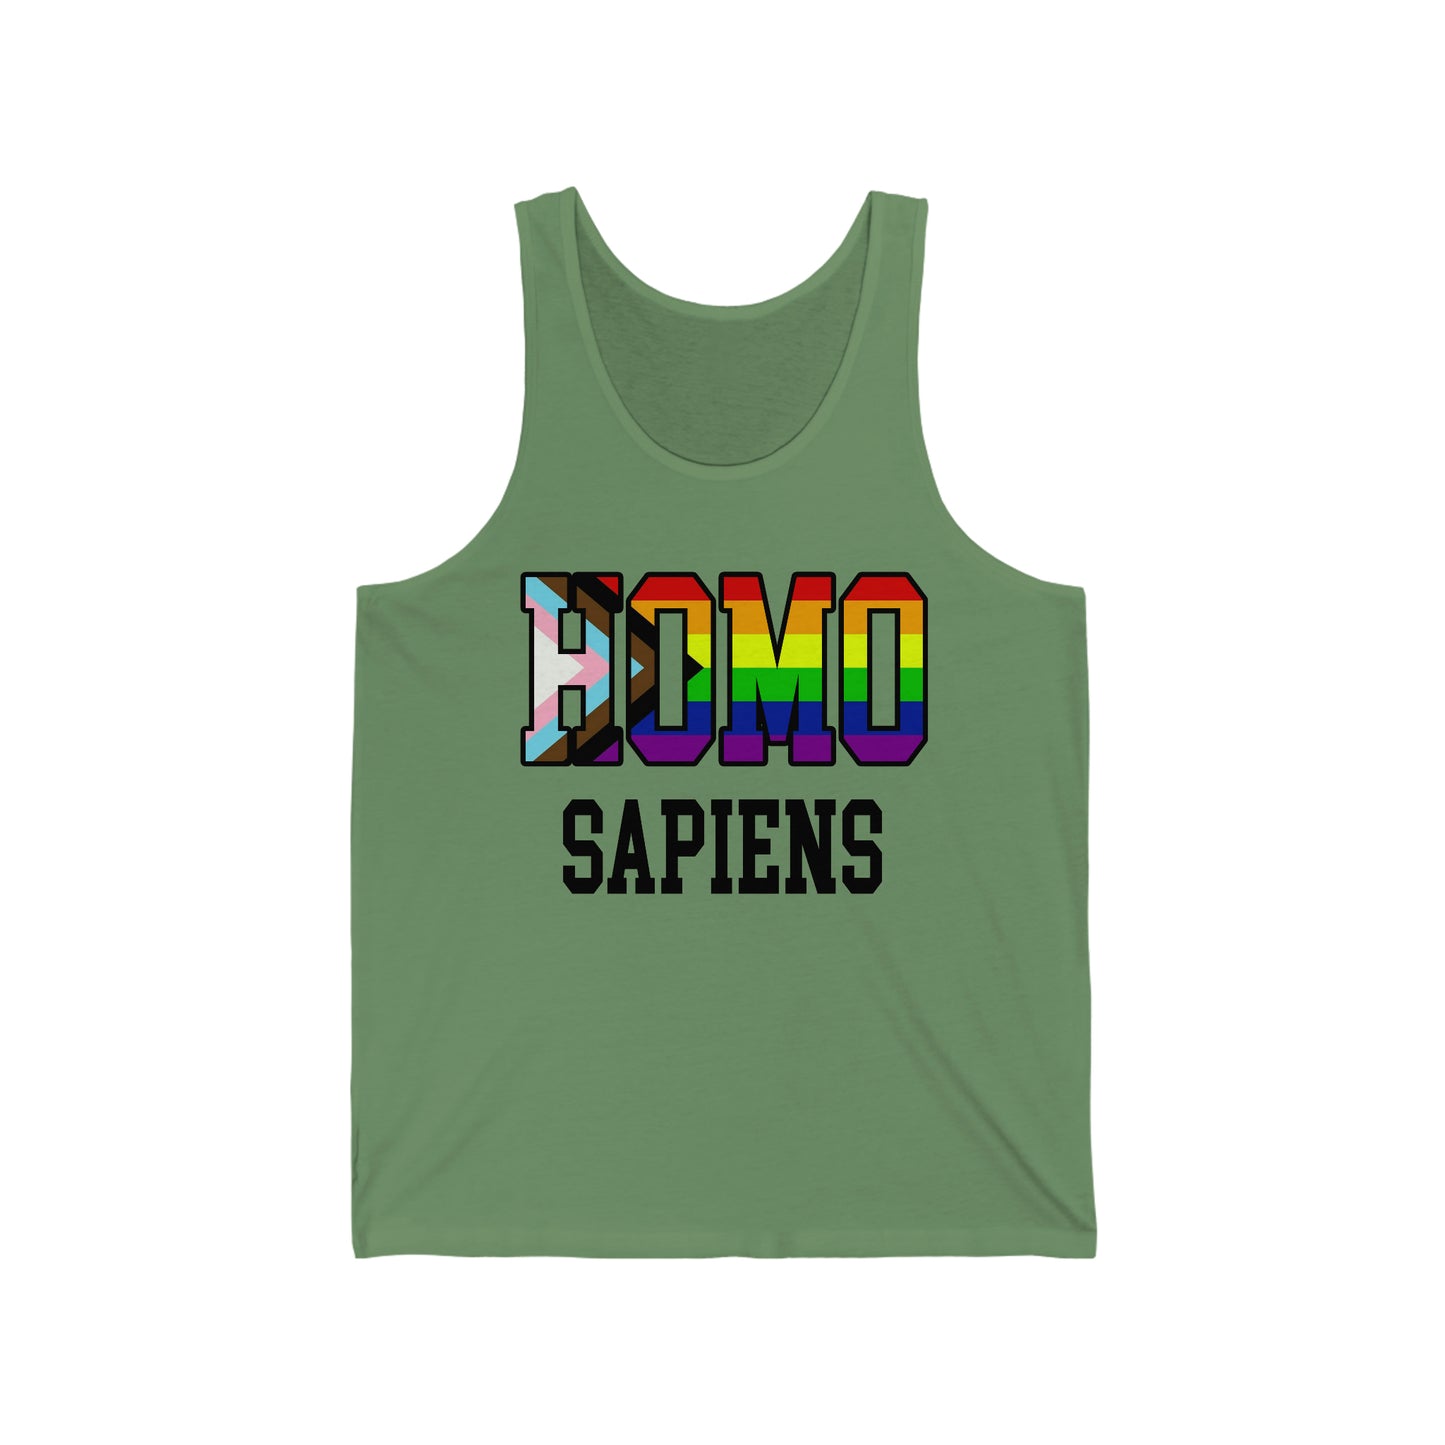 HOMO SAPIENS Camiseta sin mangas unisex para adultos